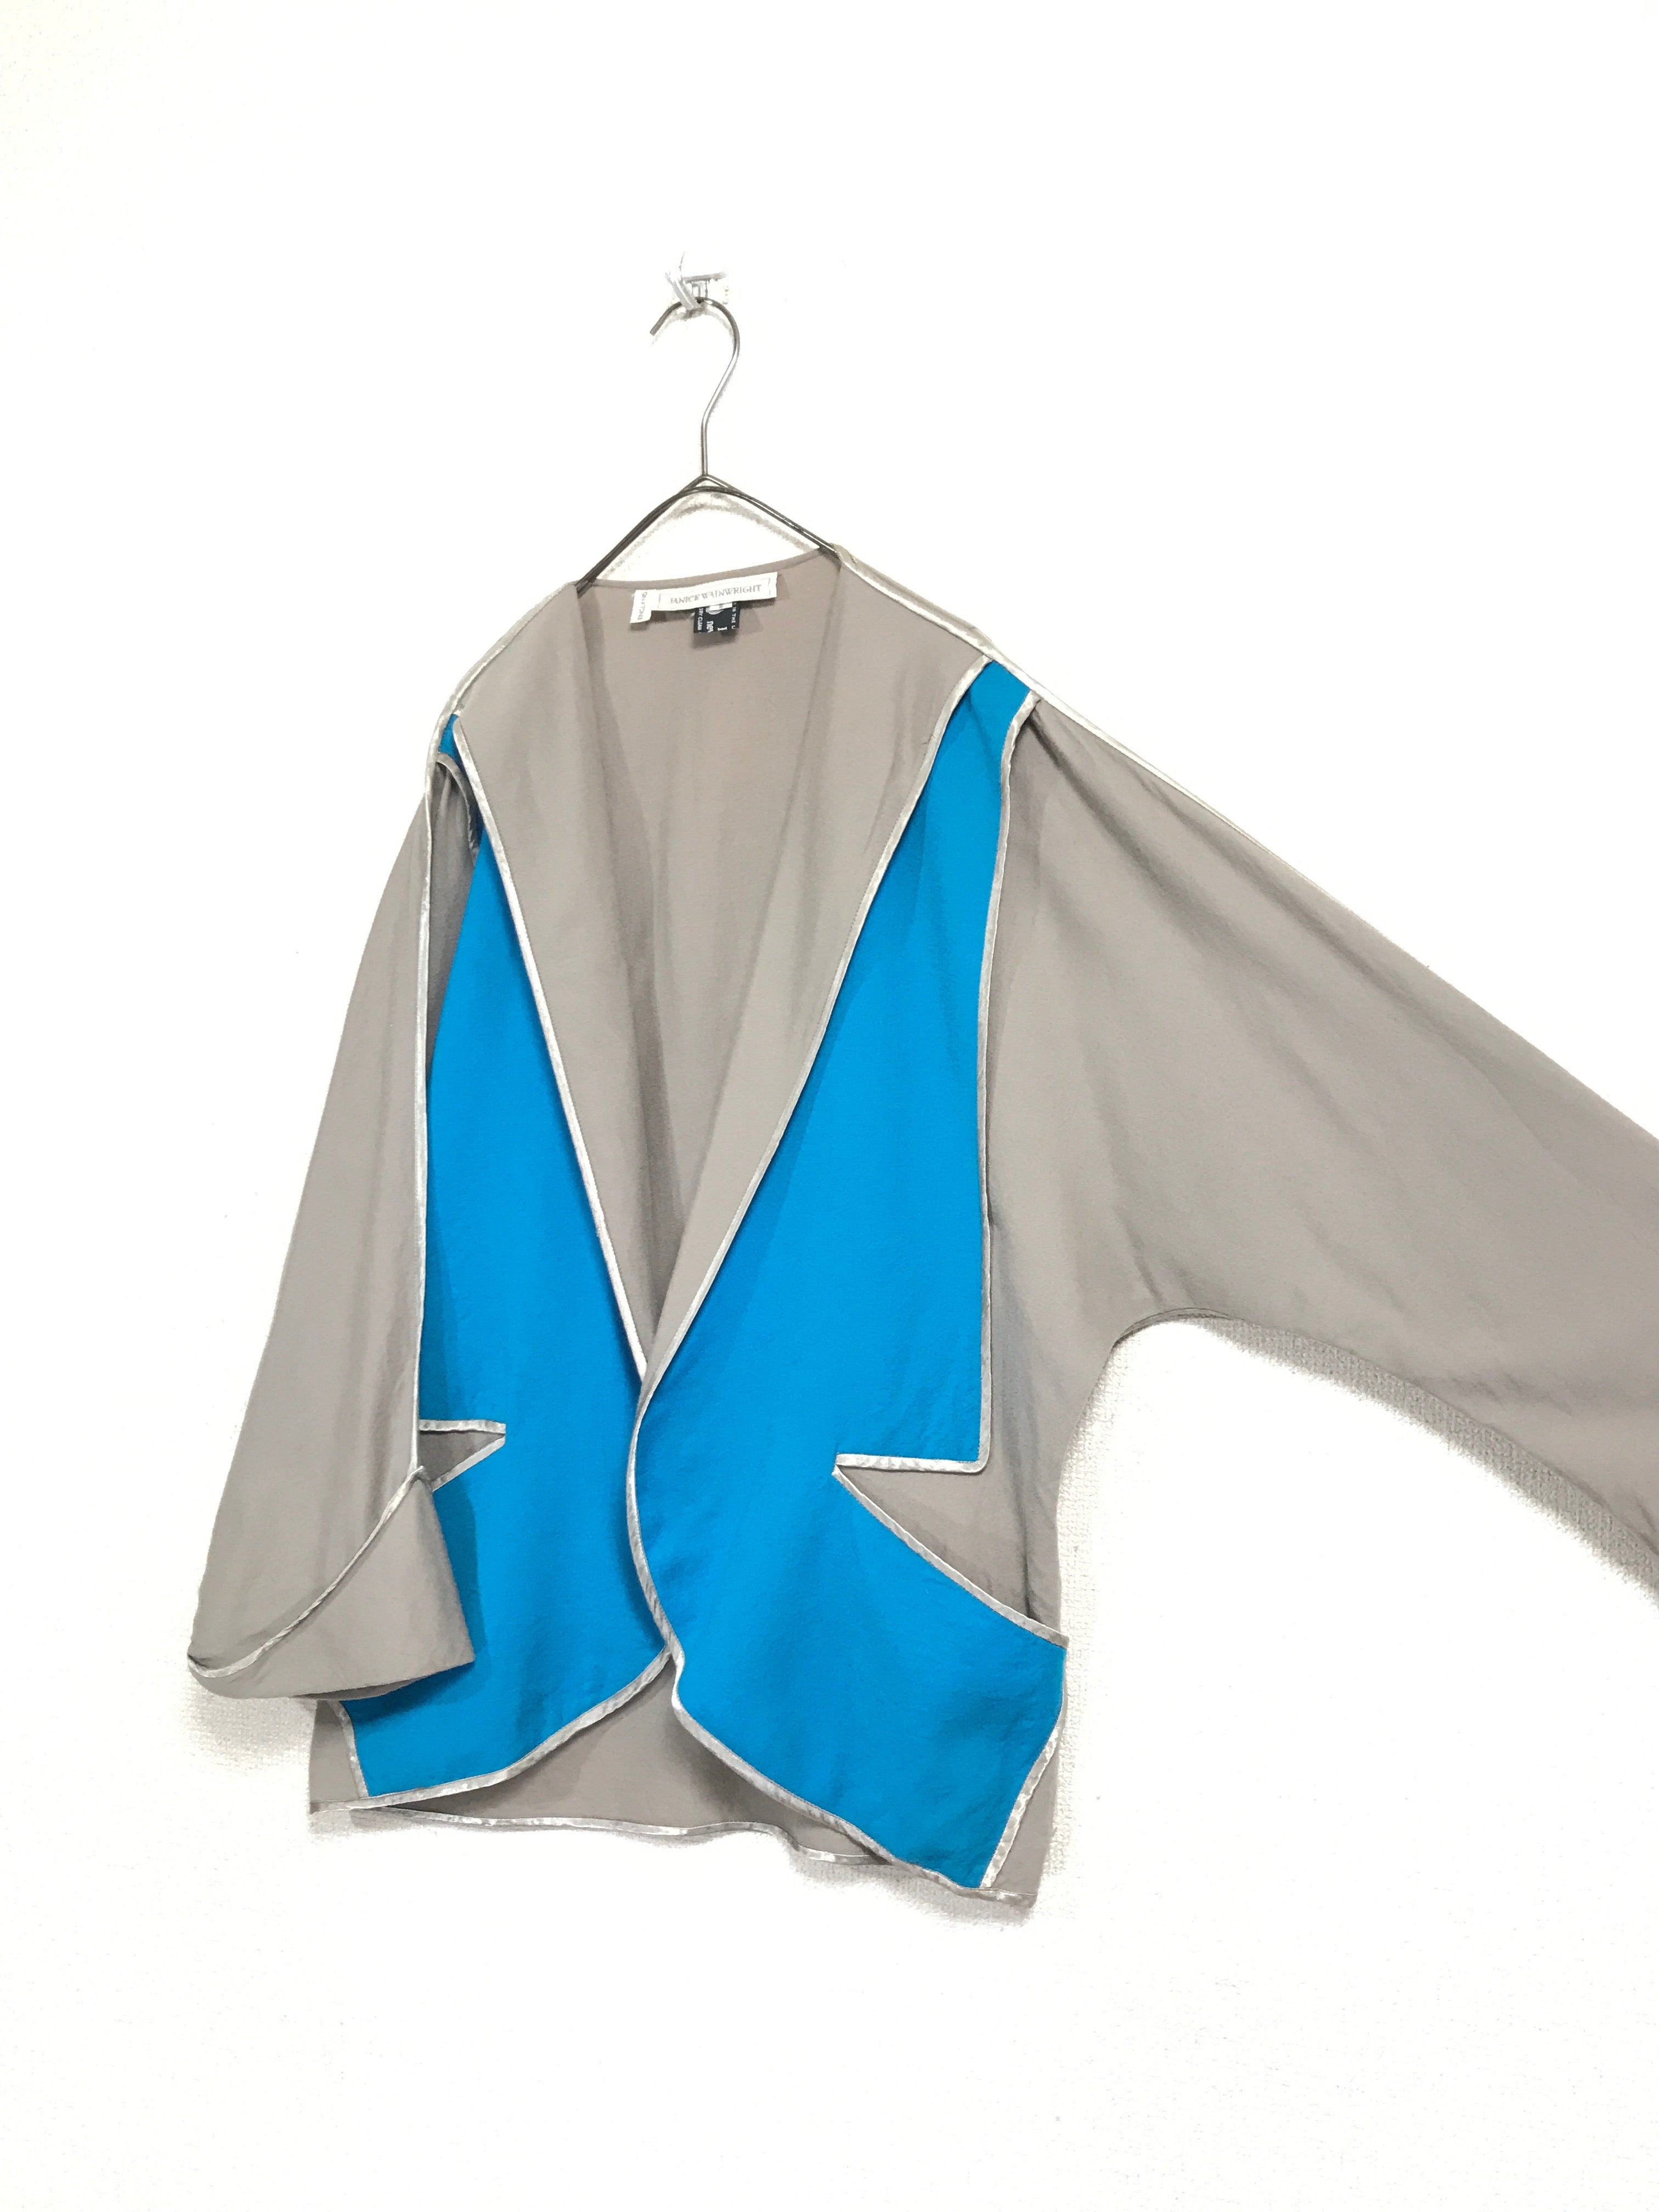 80's JANICE WAINWRIGHT wool 2-tone color deformed jacket